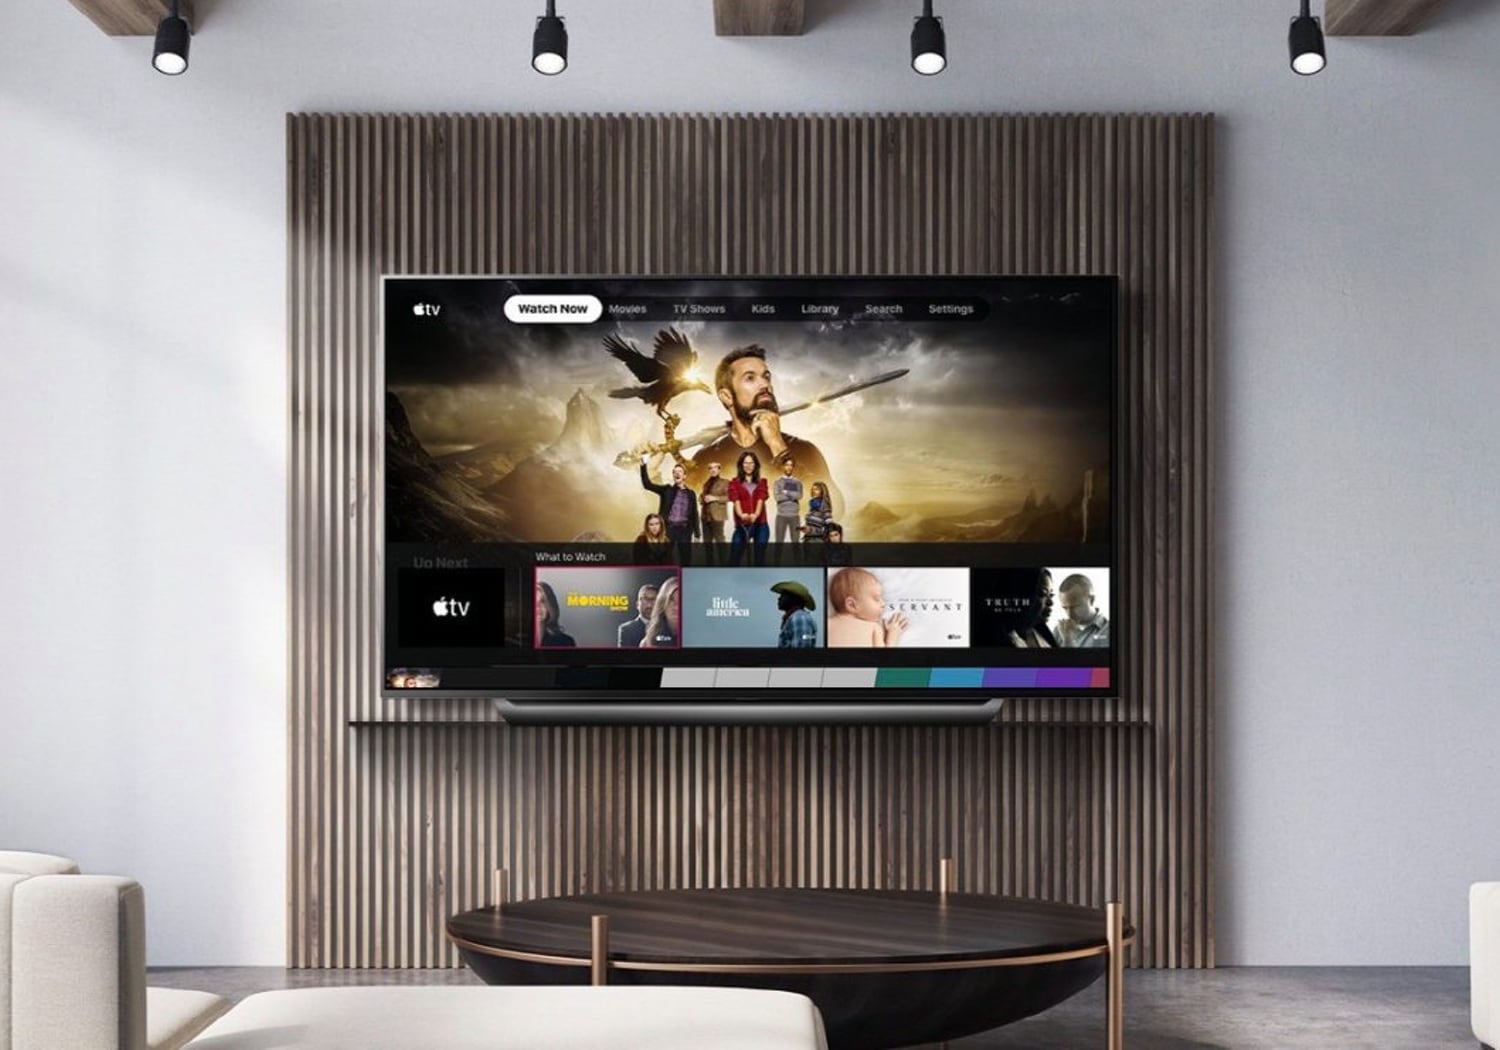 Телевизор Эппл 2020. Телевизор LG 2019 года. Телевизор LG Smart TV 2018. Телевизоры ЛГ 2019 модельного года. Airplay на телевизоре lg